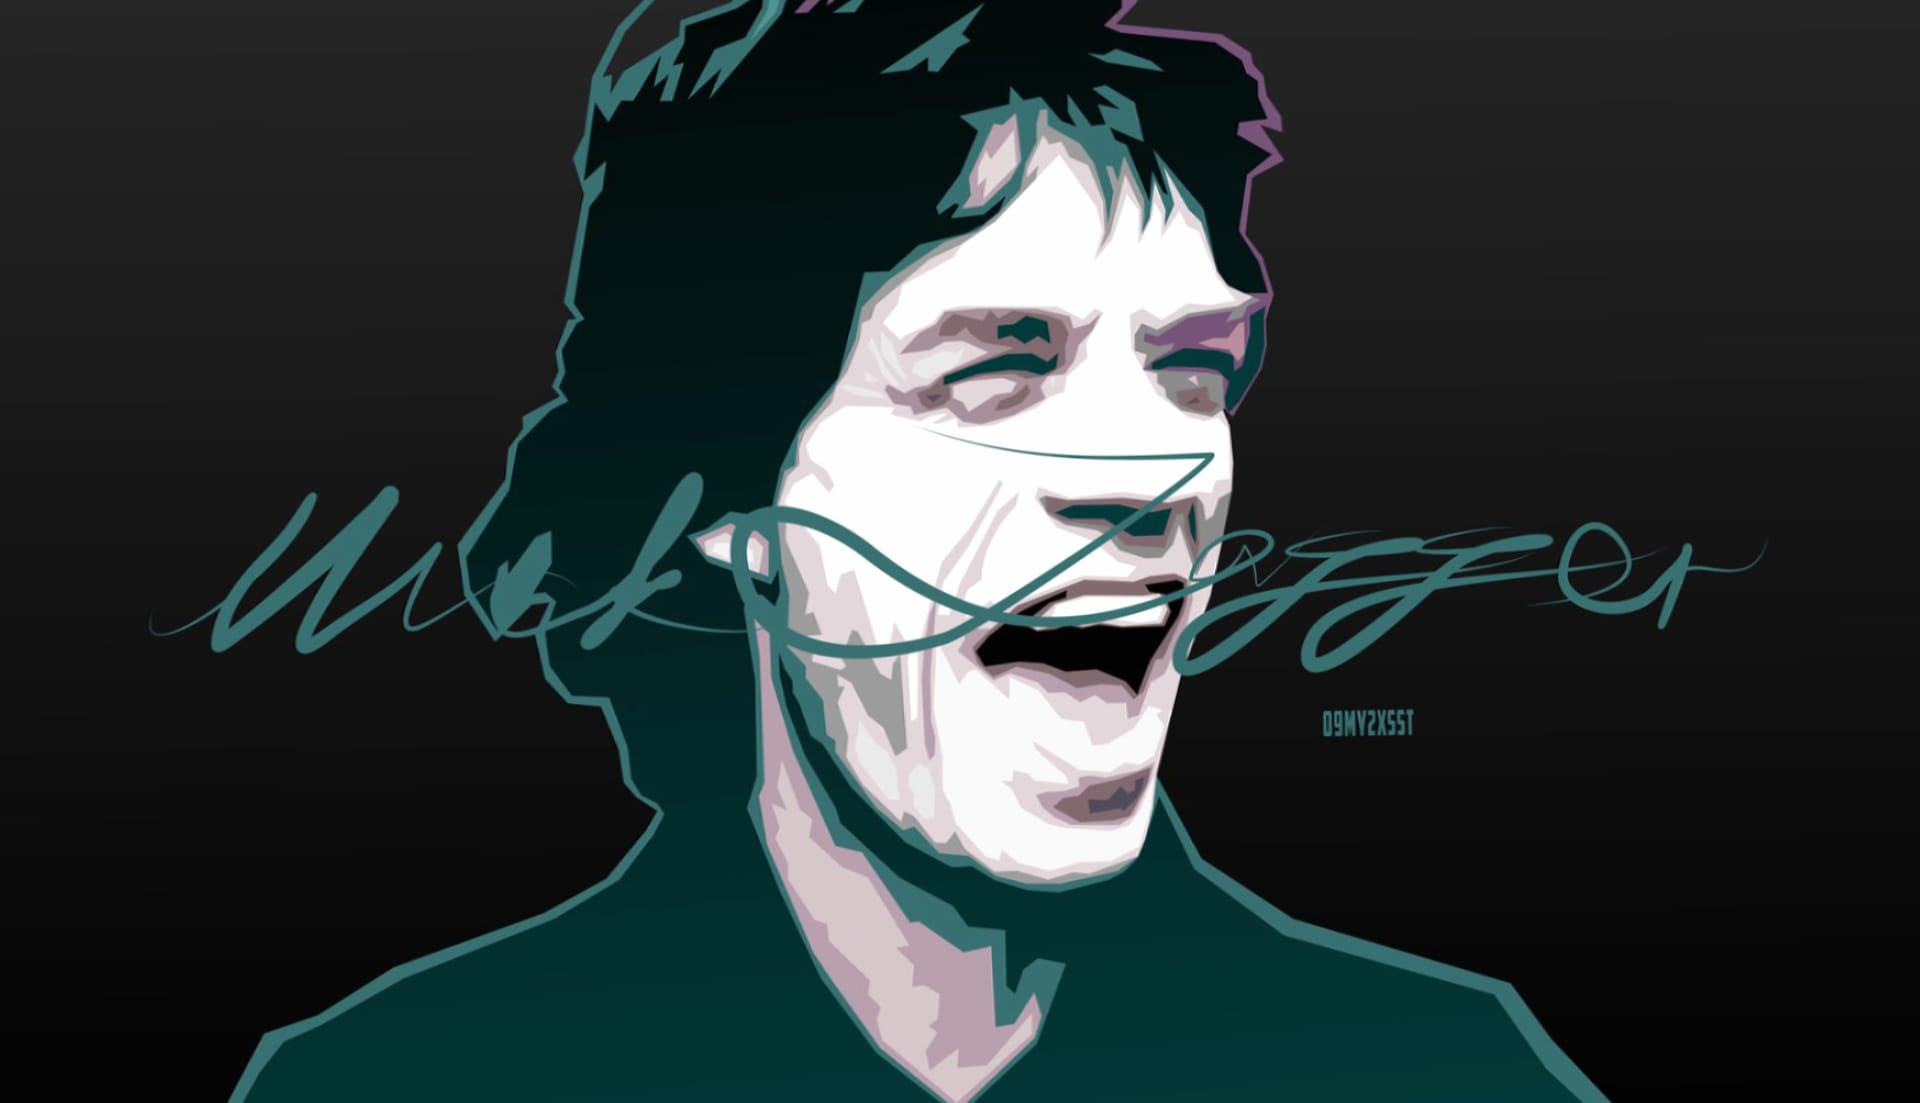 Mick Jagger at 1024 x 1024 iPad size wallpapers HD quality